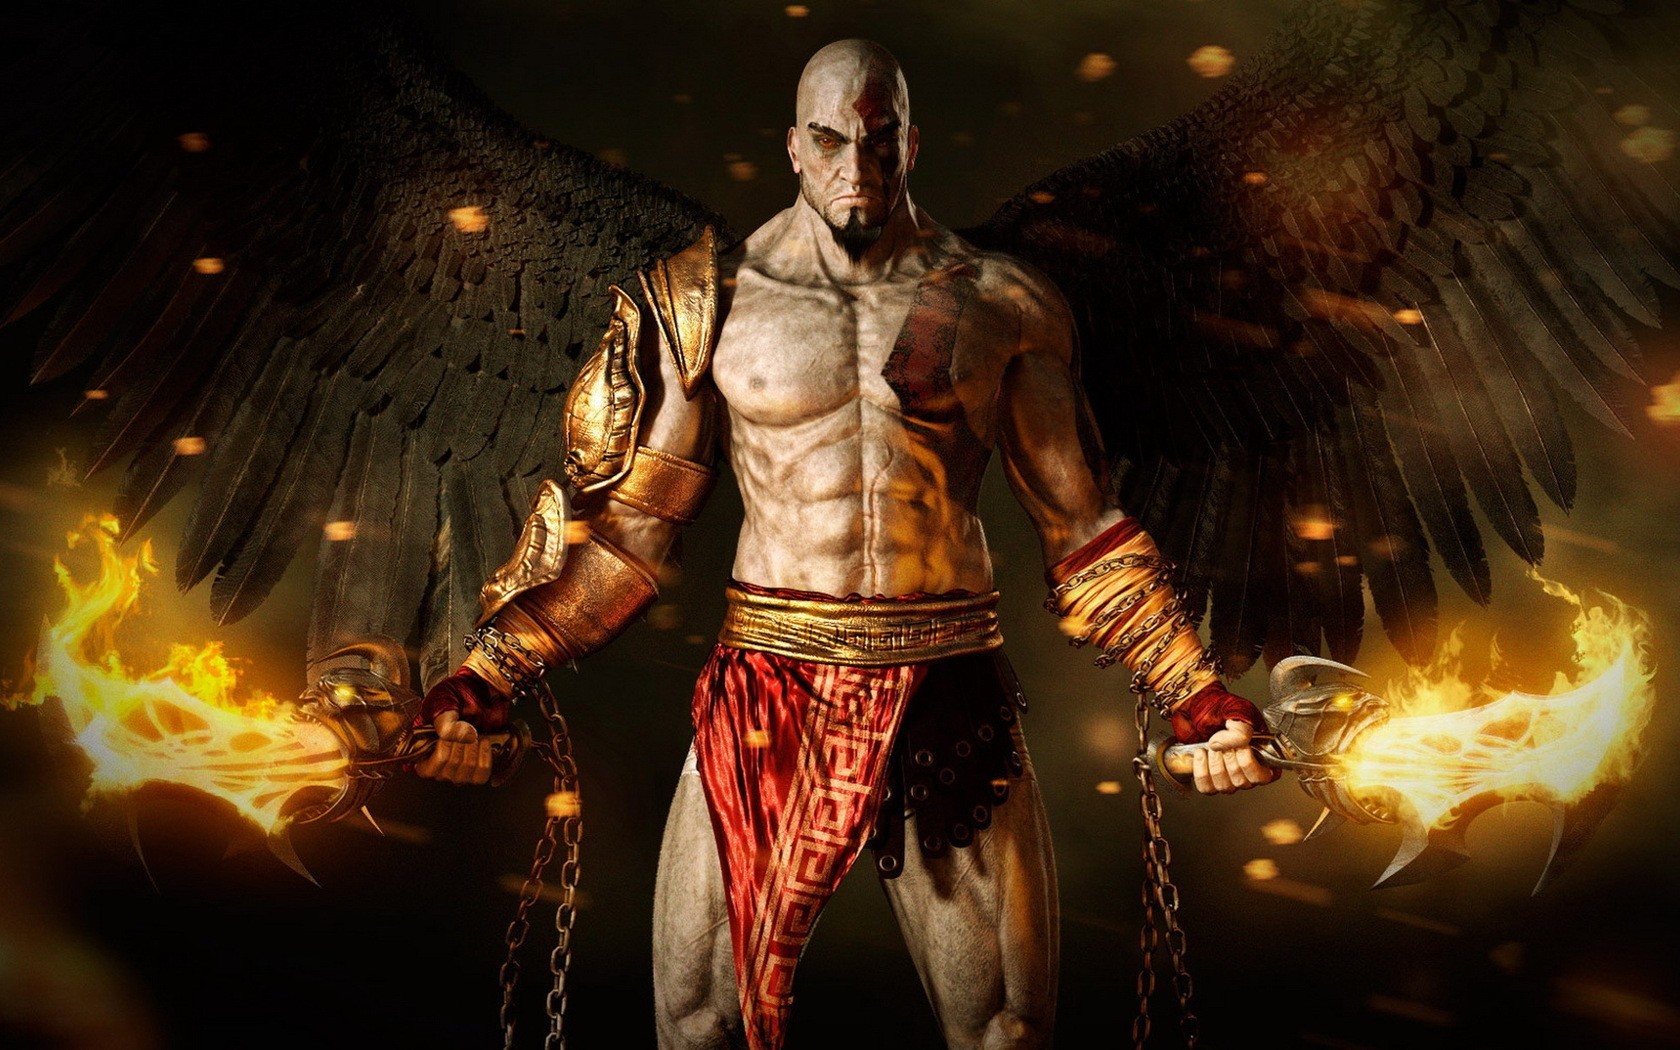 General 1680x1050 God of War Kratos black wings God of War III video game warriors video games muscular video game men video game characters video game art